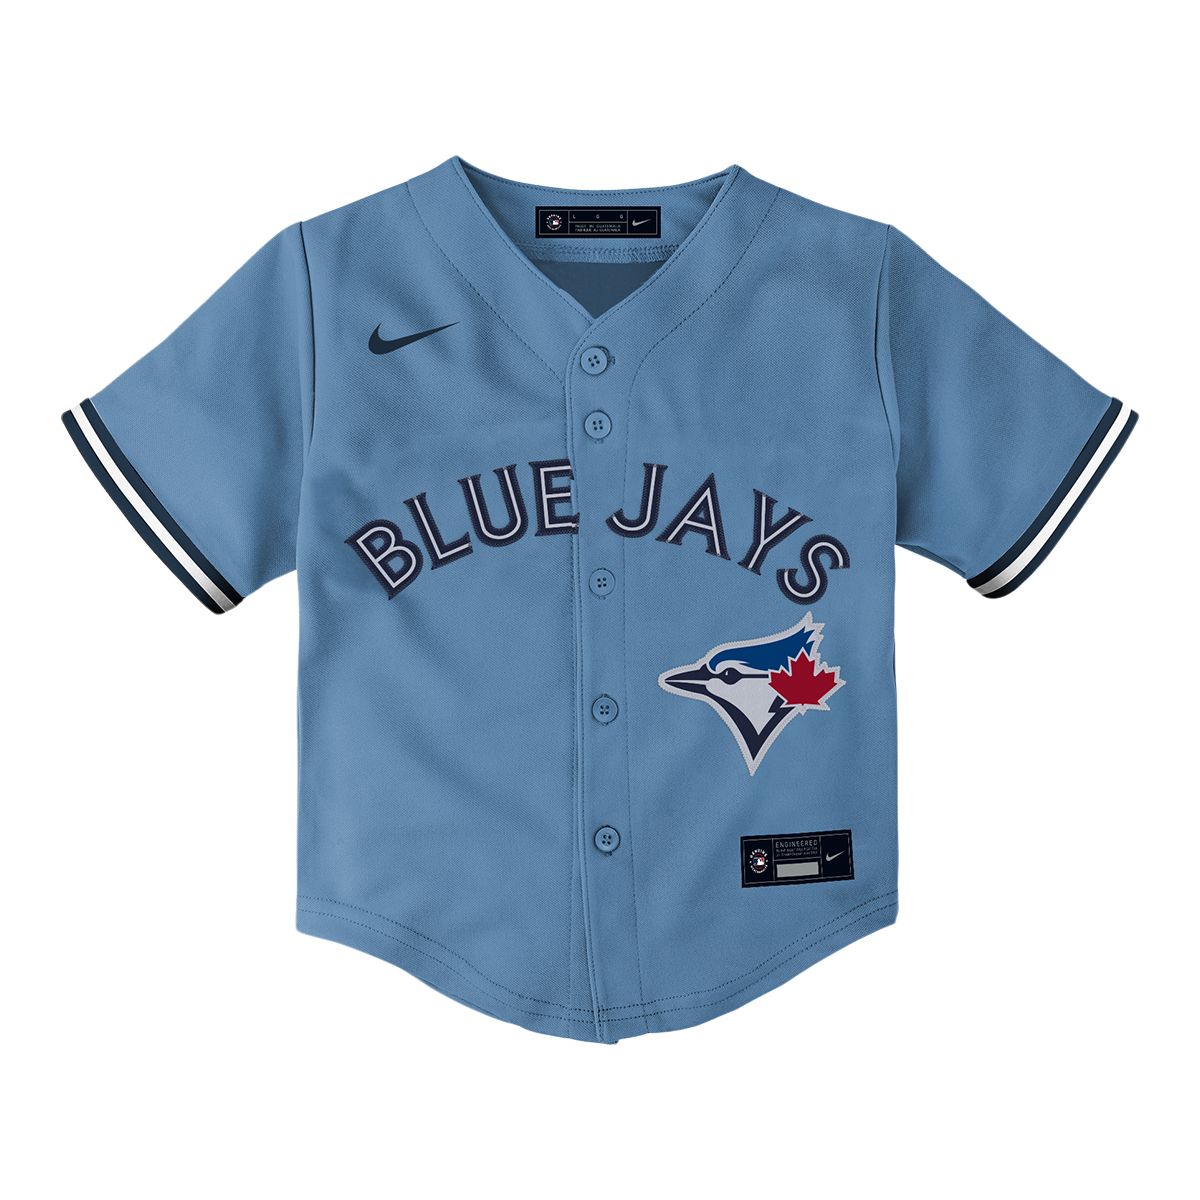 Men's Toronto Blue Jays Bo Bichette Home Powder Blue Alternate Player Jersey  (X-Large), Jerseys -  Canada